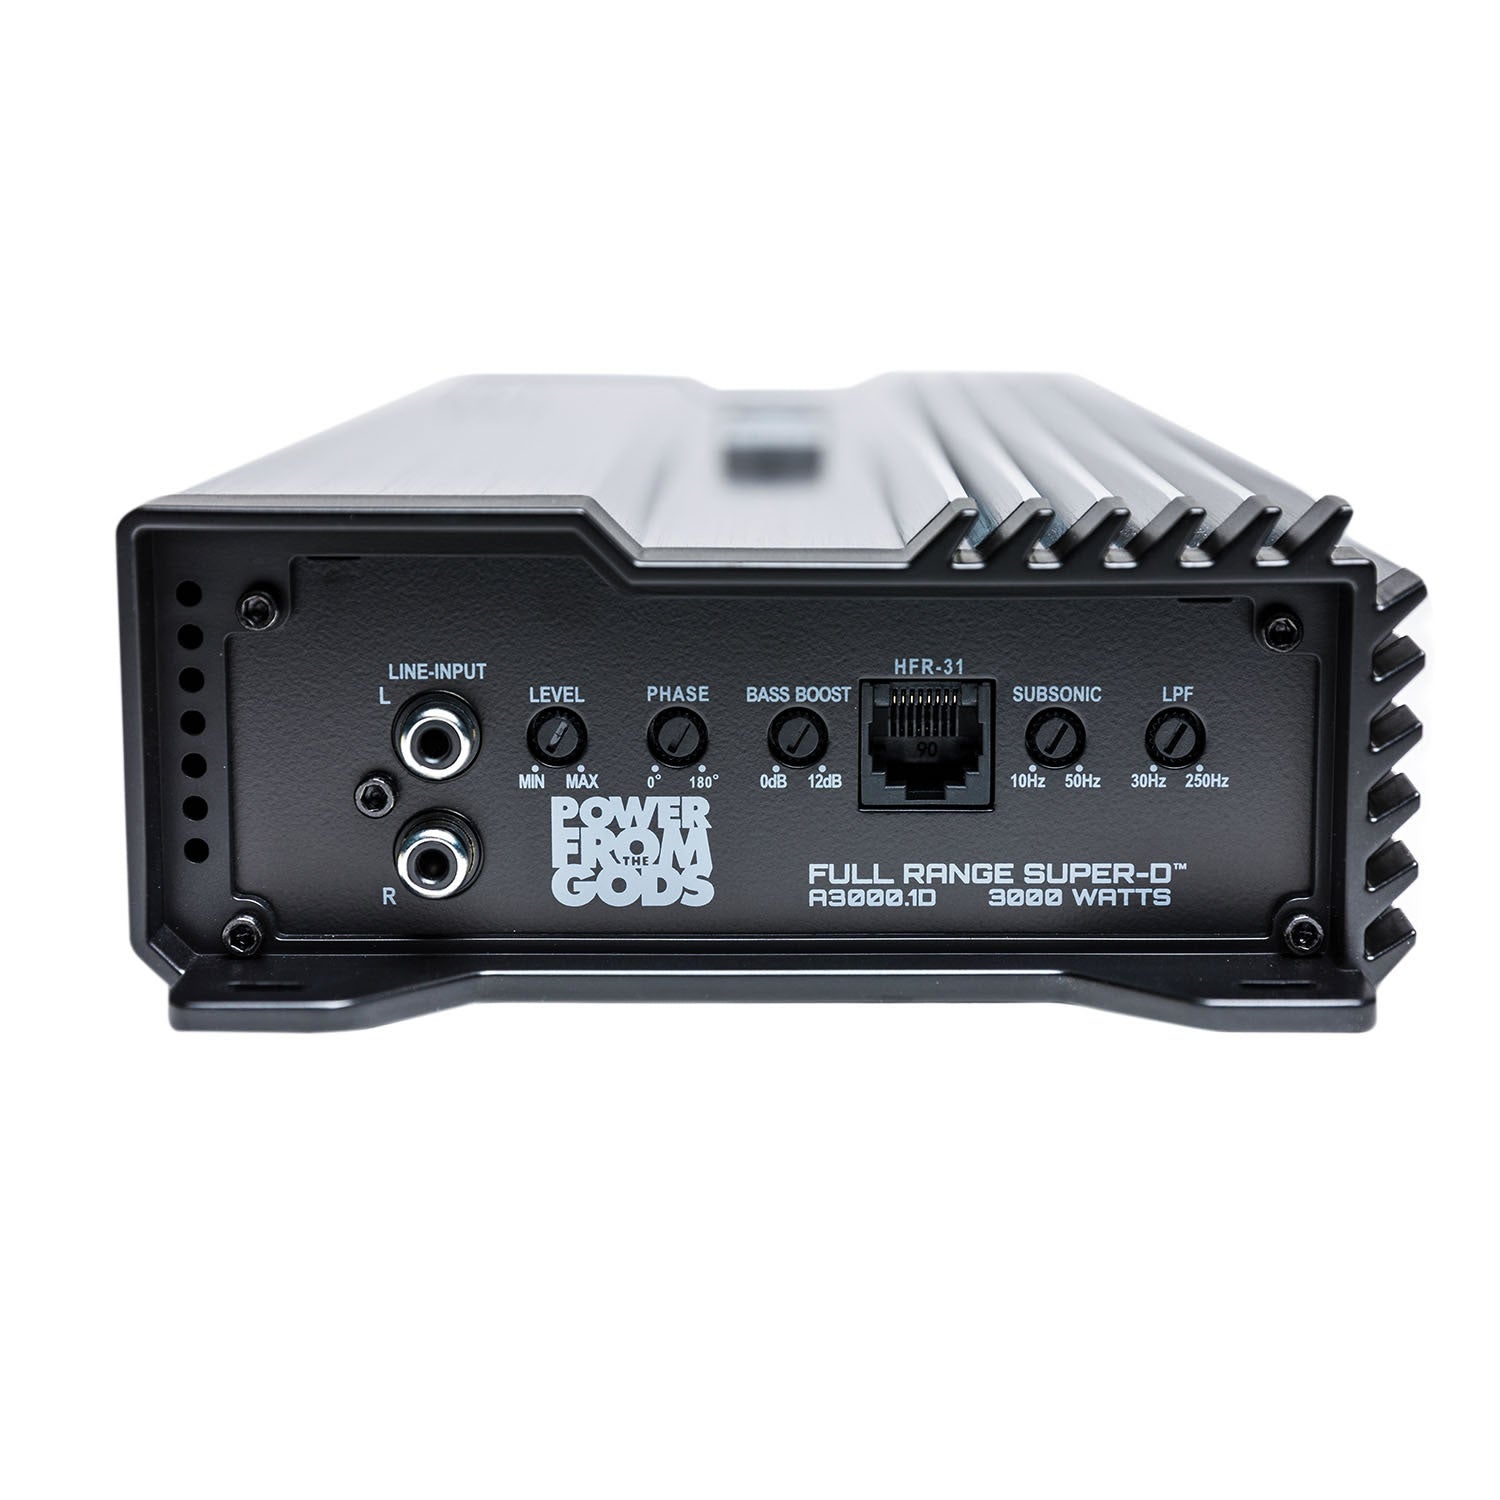 Hifonics 3000 W - 1 Ohm Monoblock Ca Audio Amplifier